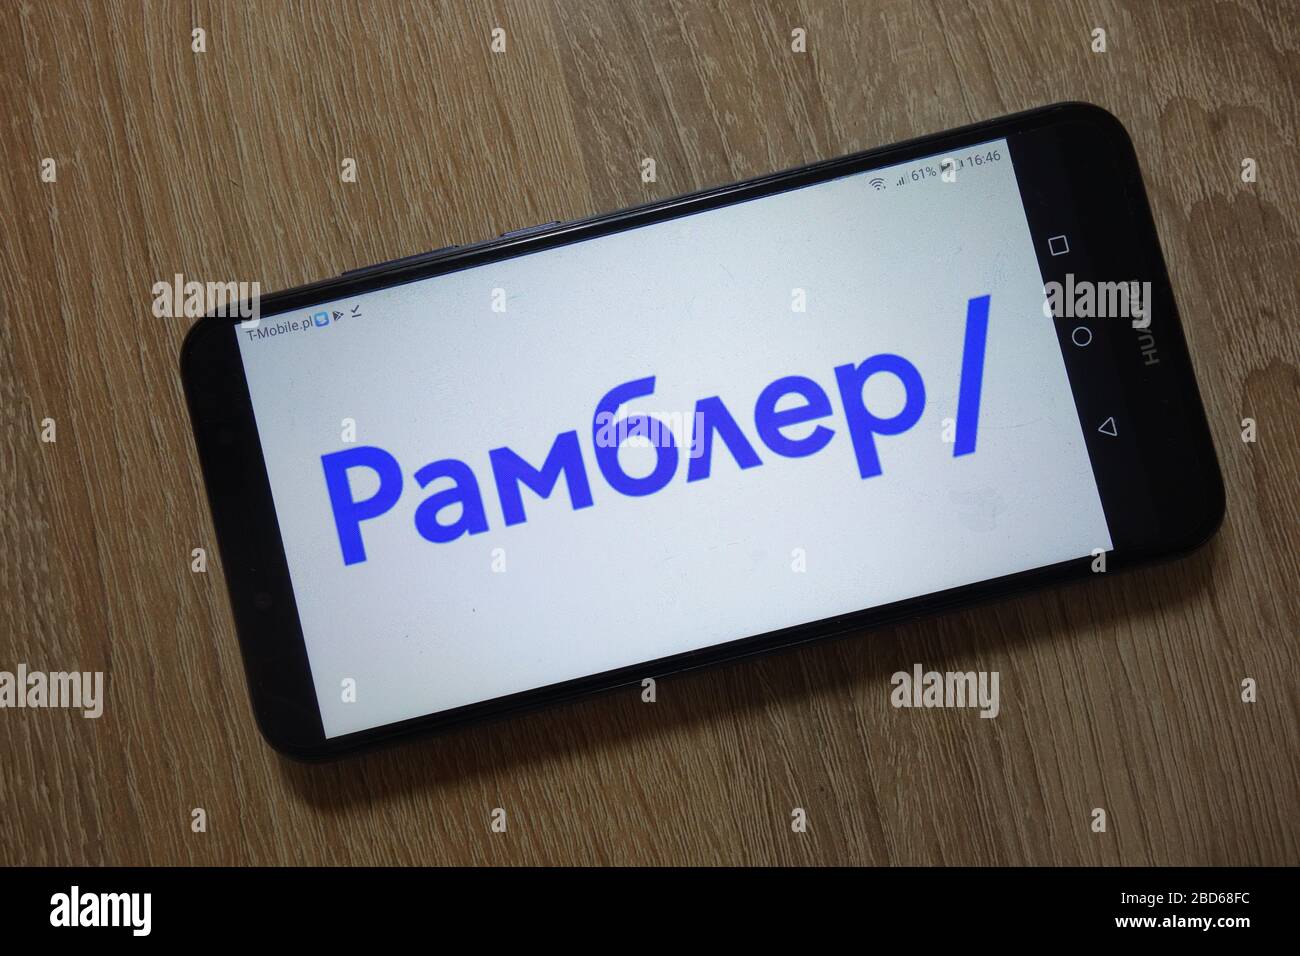 Rambler portal logo displayed on smartphone Stock Photo